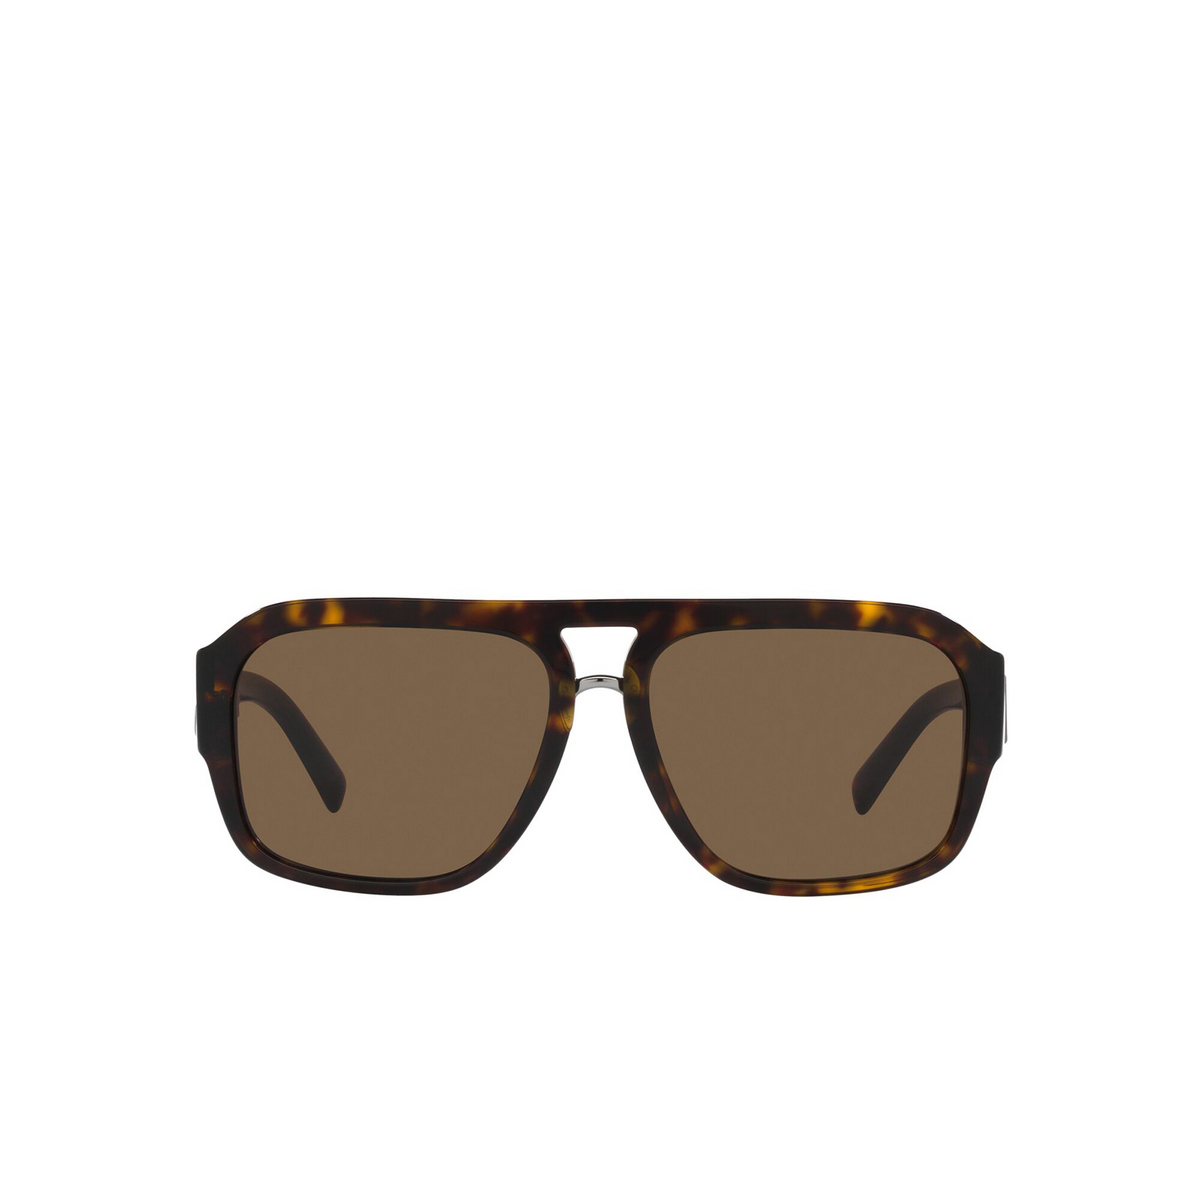 Dolce & Gabbana® Aviator Sunglasses: DG4403 color Havana 502/73 - front view.